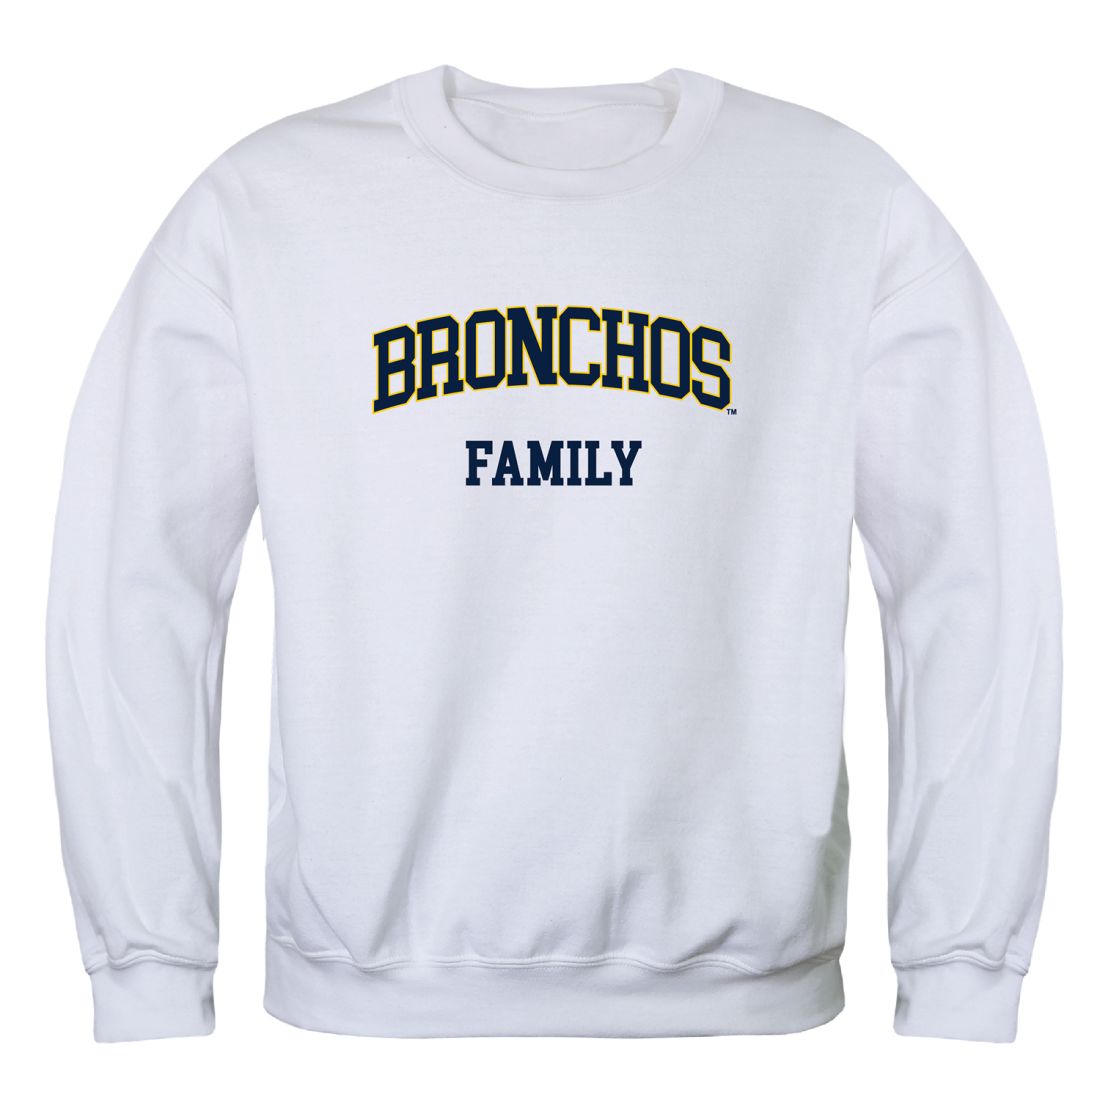 University-of-Central-Oklahoma-Bronchos-Family-Fleece-Crewneck-Pullover-Sweatshirt